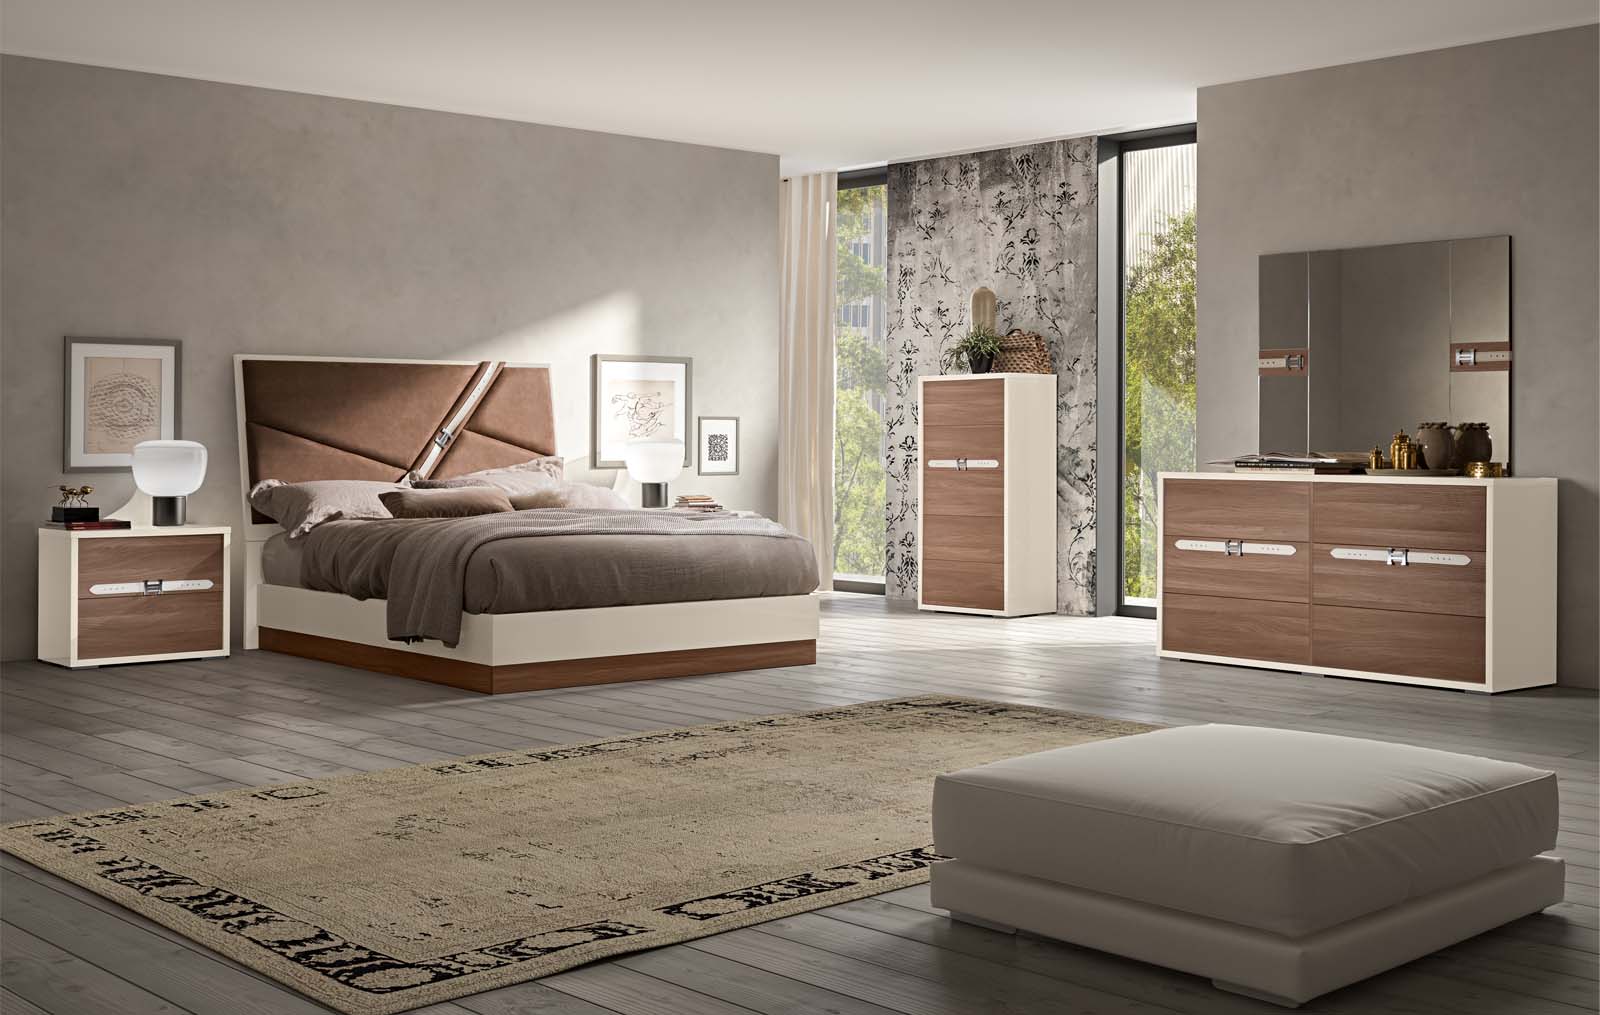 https://www.primeclassicdesign.com/images/modern-italian-bedroom-sets/italian-oak-wood-bedroom-with-storage-wardrobe-evolution.jpg